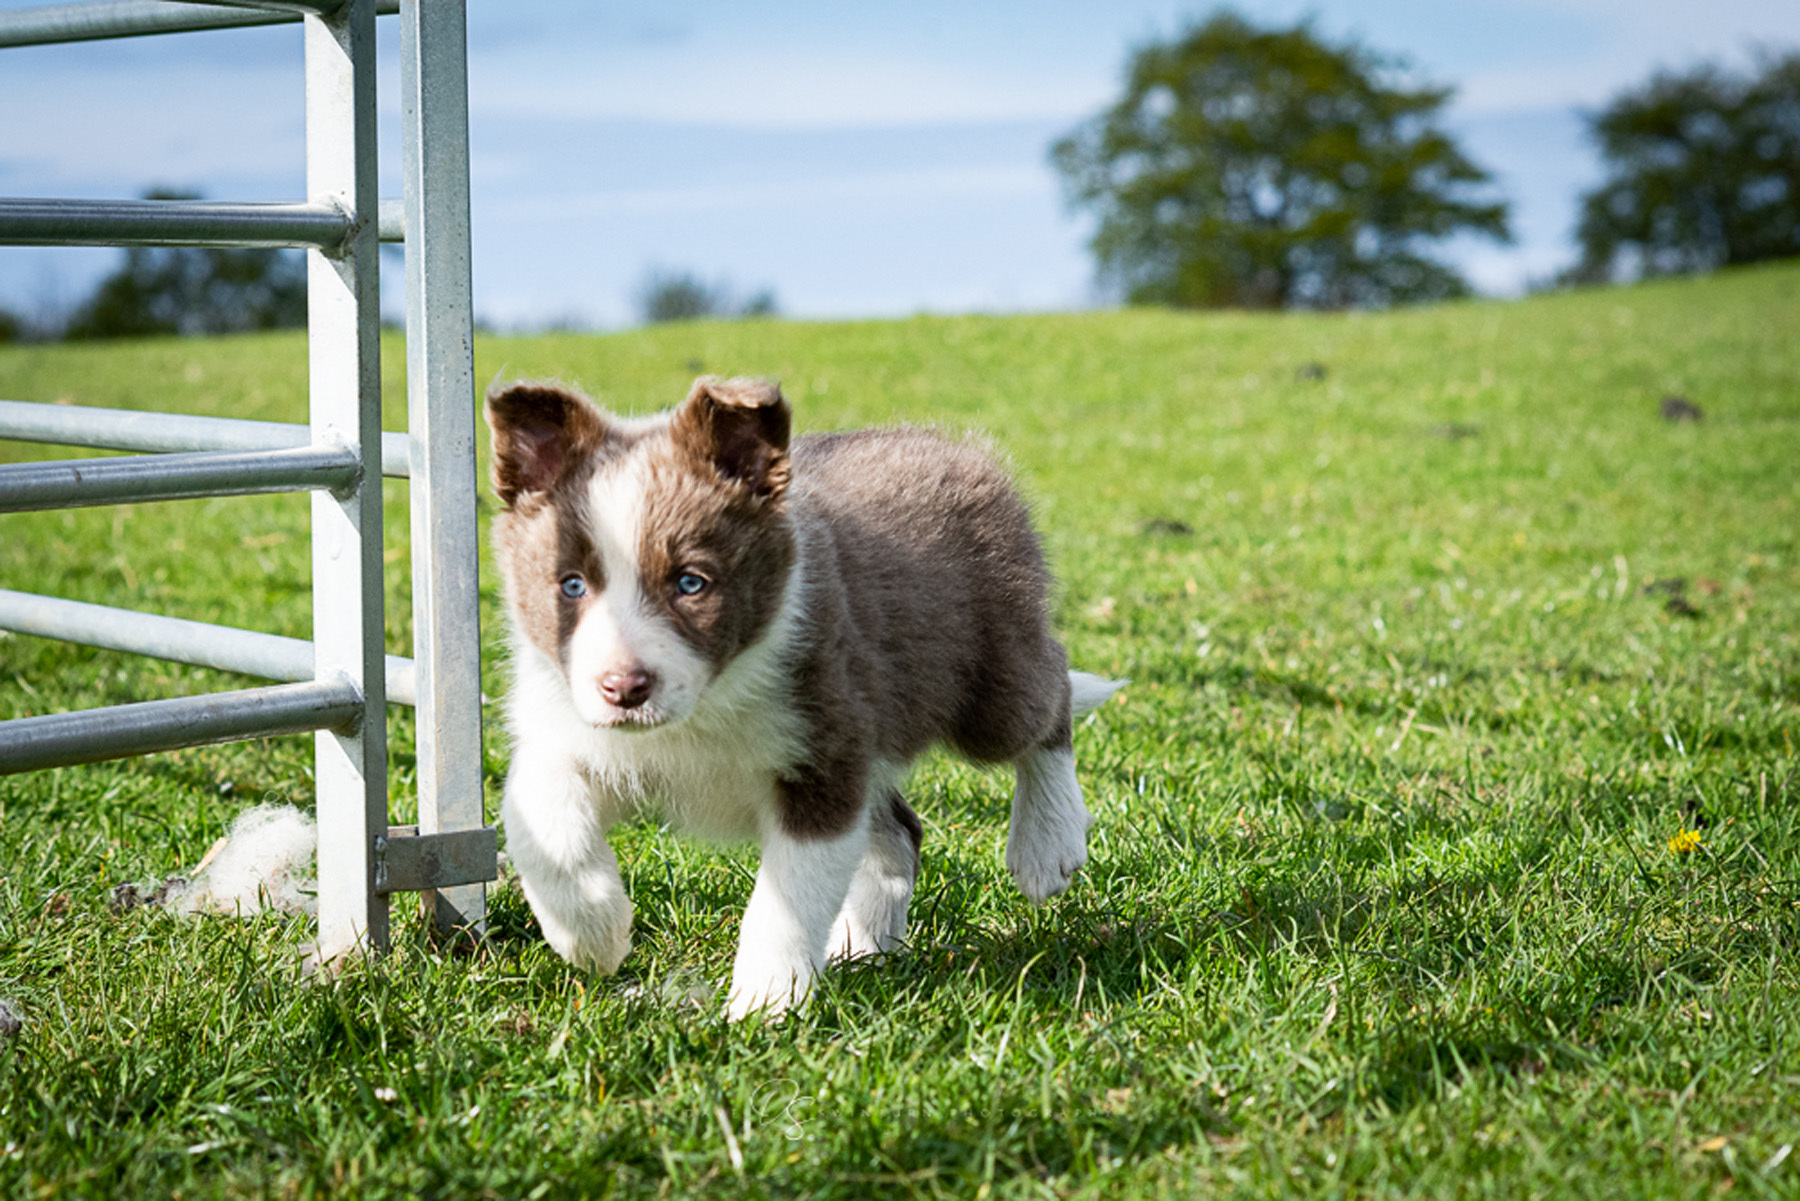 Glynne Jones’ nine-week-old Pentir Lassie set a new world record price of £7600 for an unbroken pup